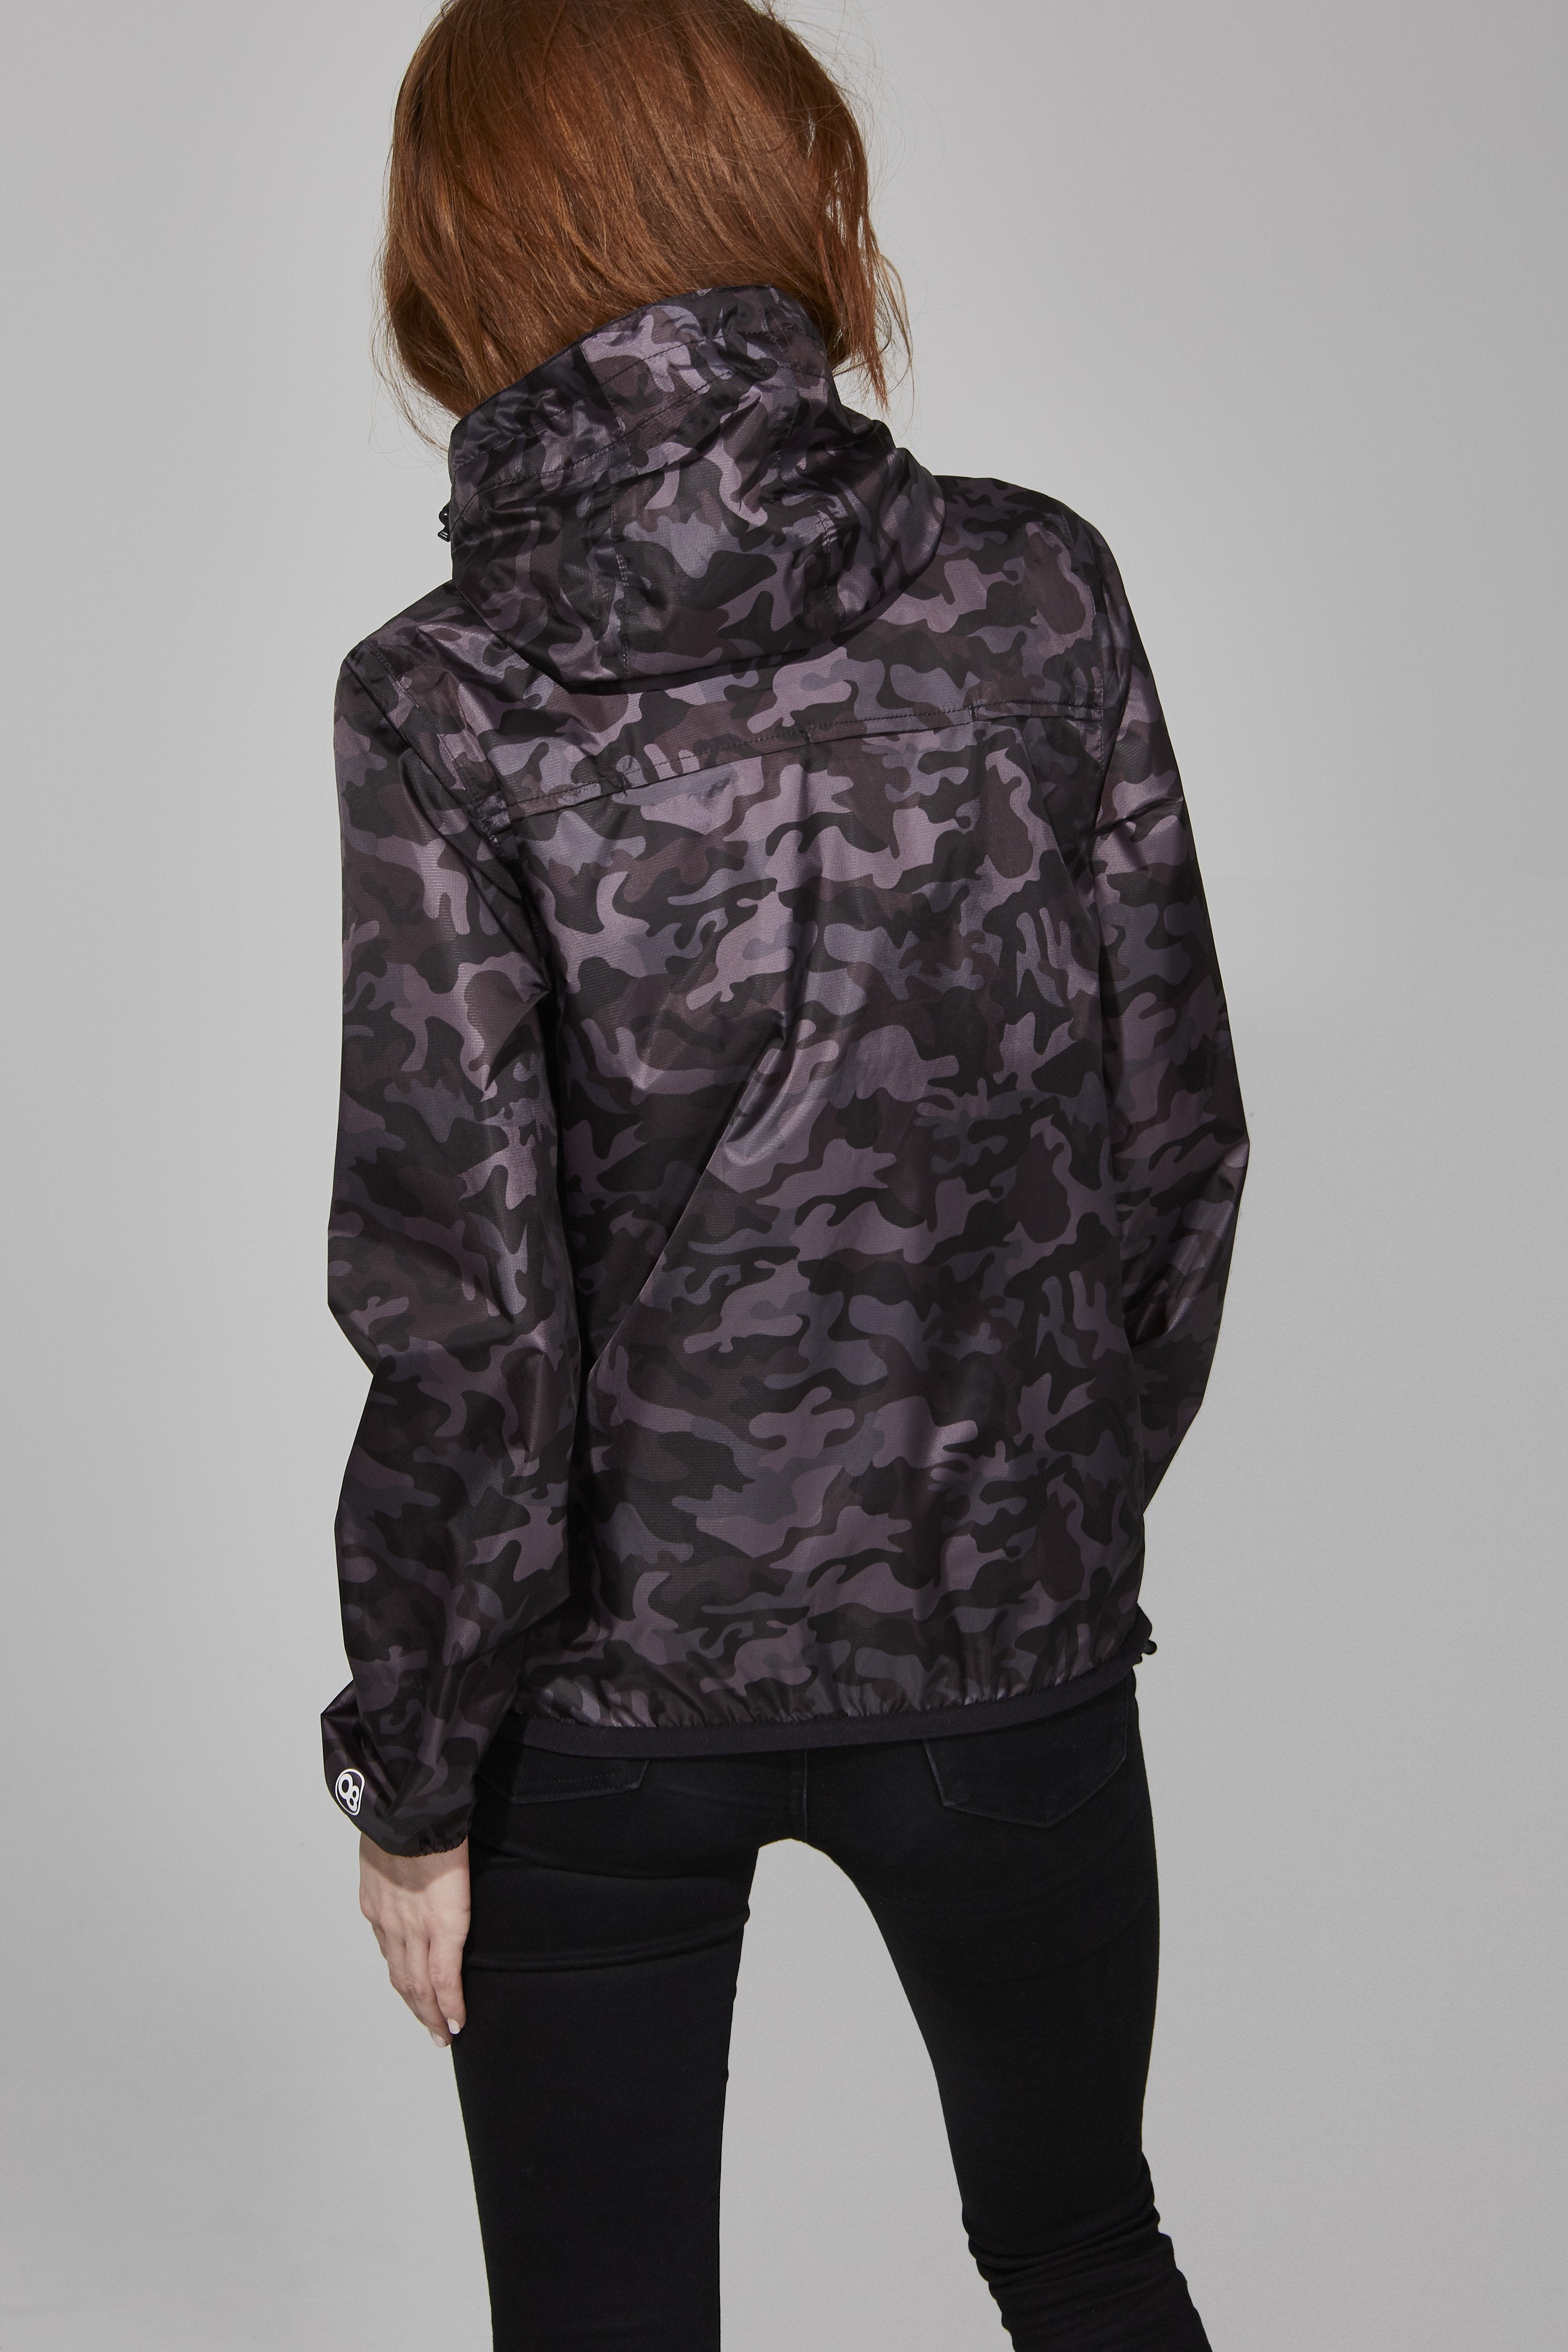 Sloane Print - Black Camo Full Zip Packable Rain Jacket - O8lifestyle.